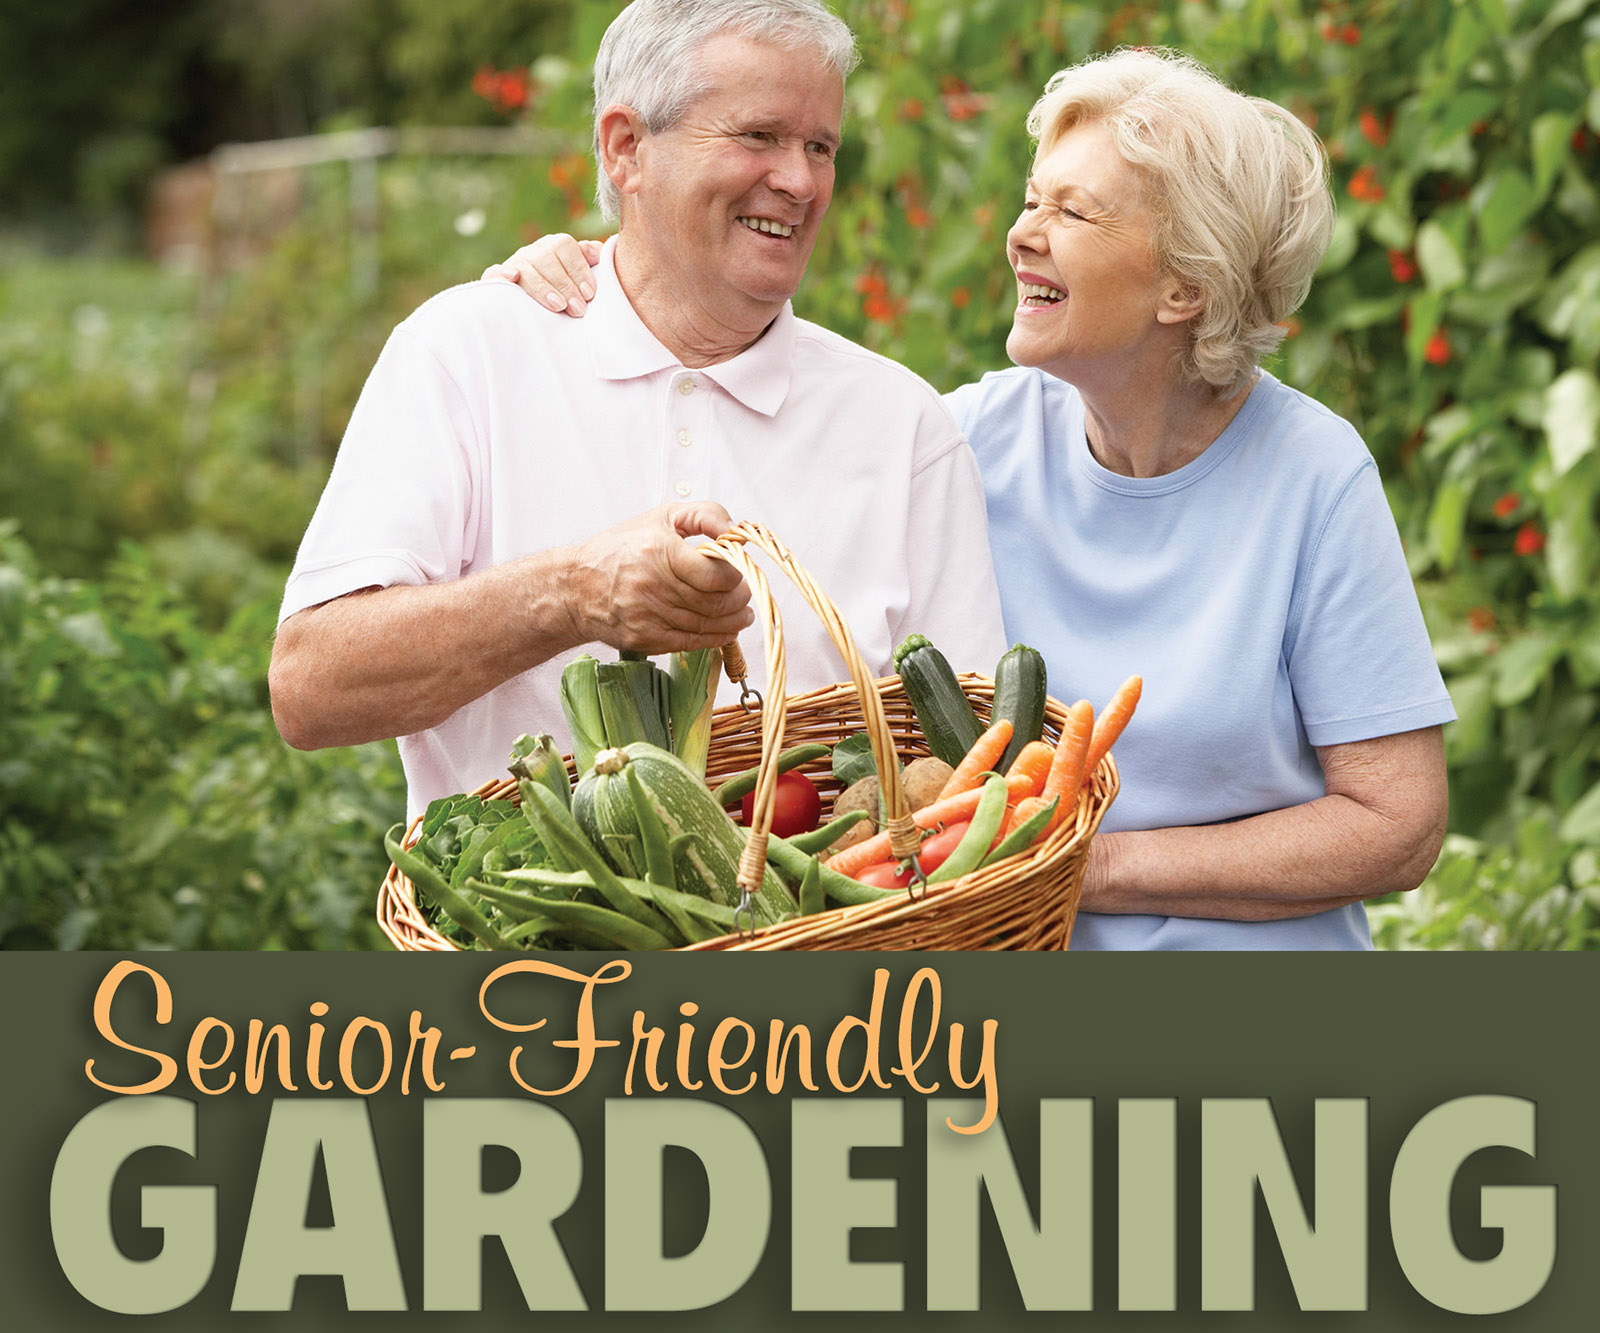 Senior-Friendly Gardening: 10 Tips for Safe and Enjoyable Gardening